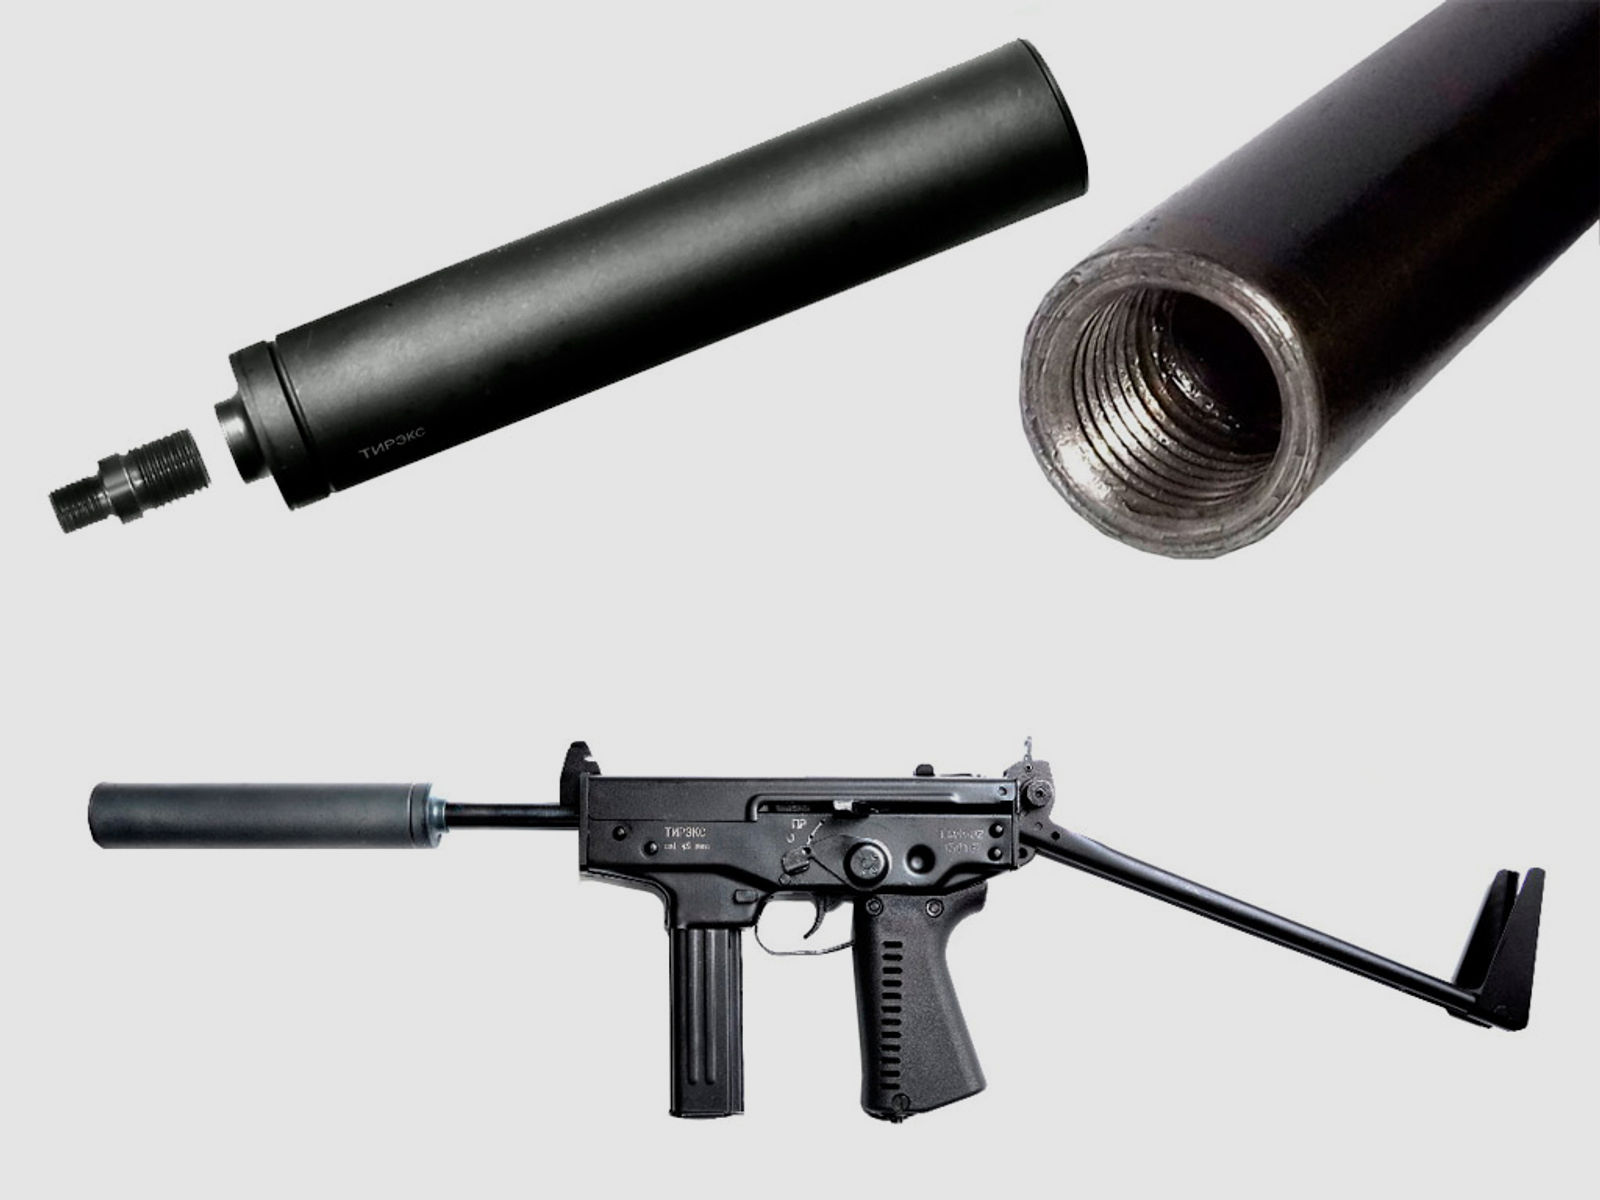 SchalldĂ¤mpferset fĂĽr CO2 Maschinenpistole MP Tyrex / Tirex, inklusive Lauf und Adapter (P18)